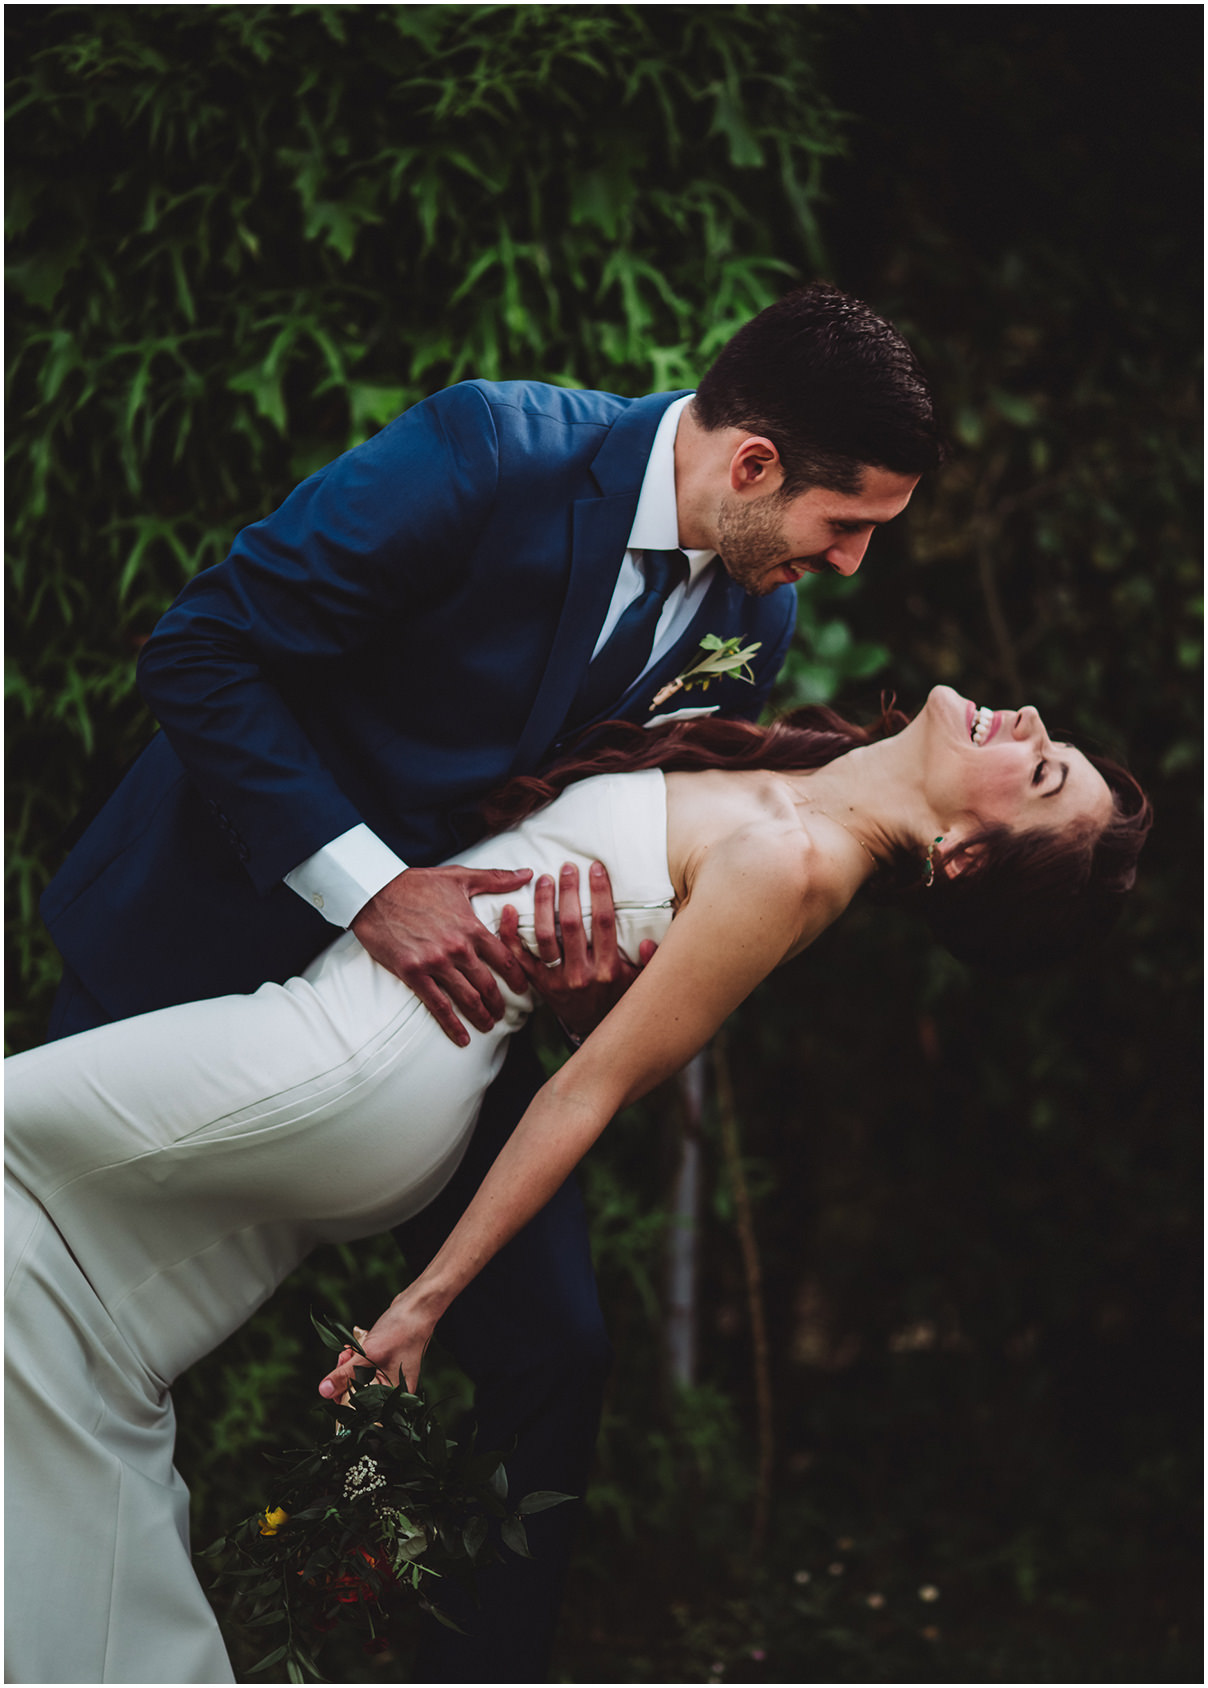 WEDDING-PHOTOGRAPHY-TUSCANY-SARA-LORENZONI-FOTOGRAFIA-MATRIMONIO-MELISSA-JOSHUA39